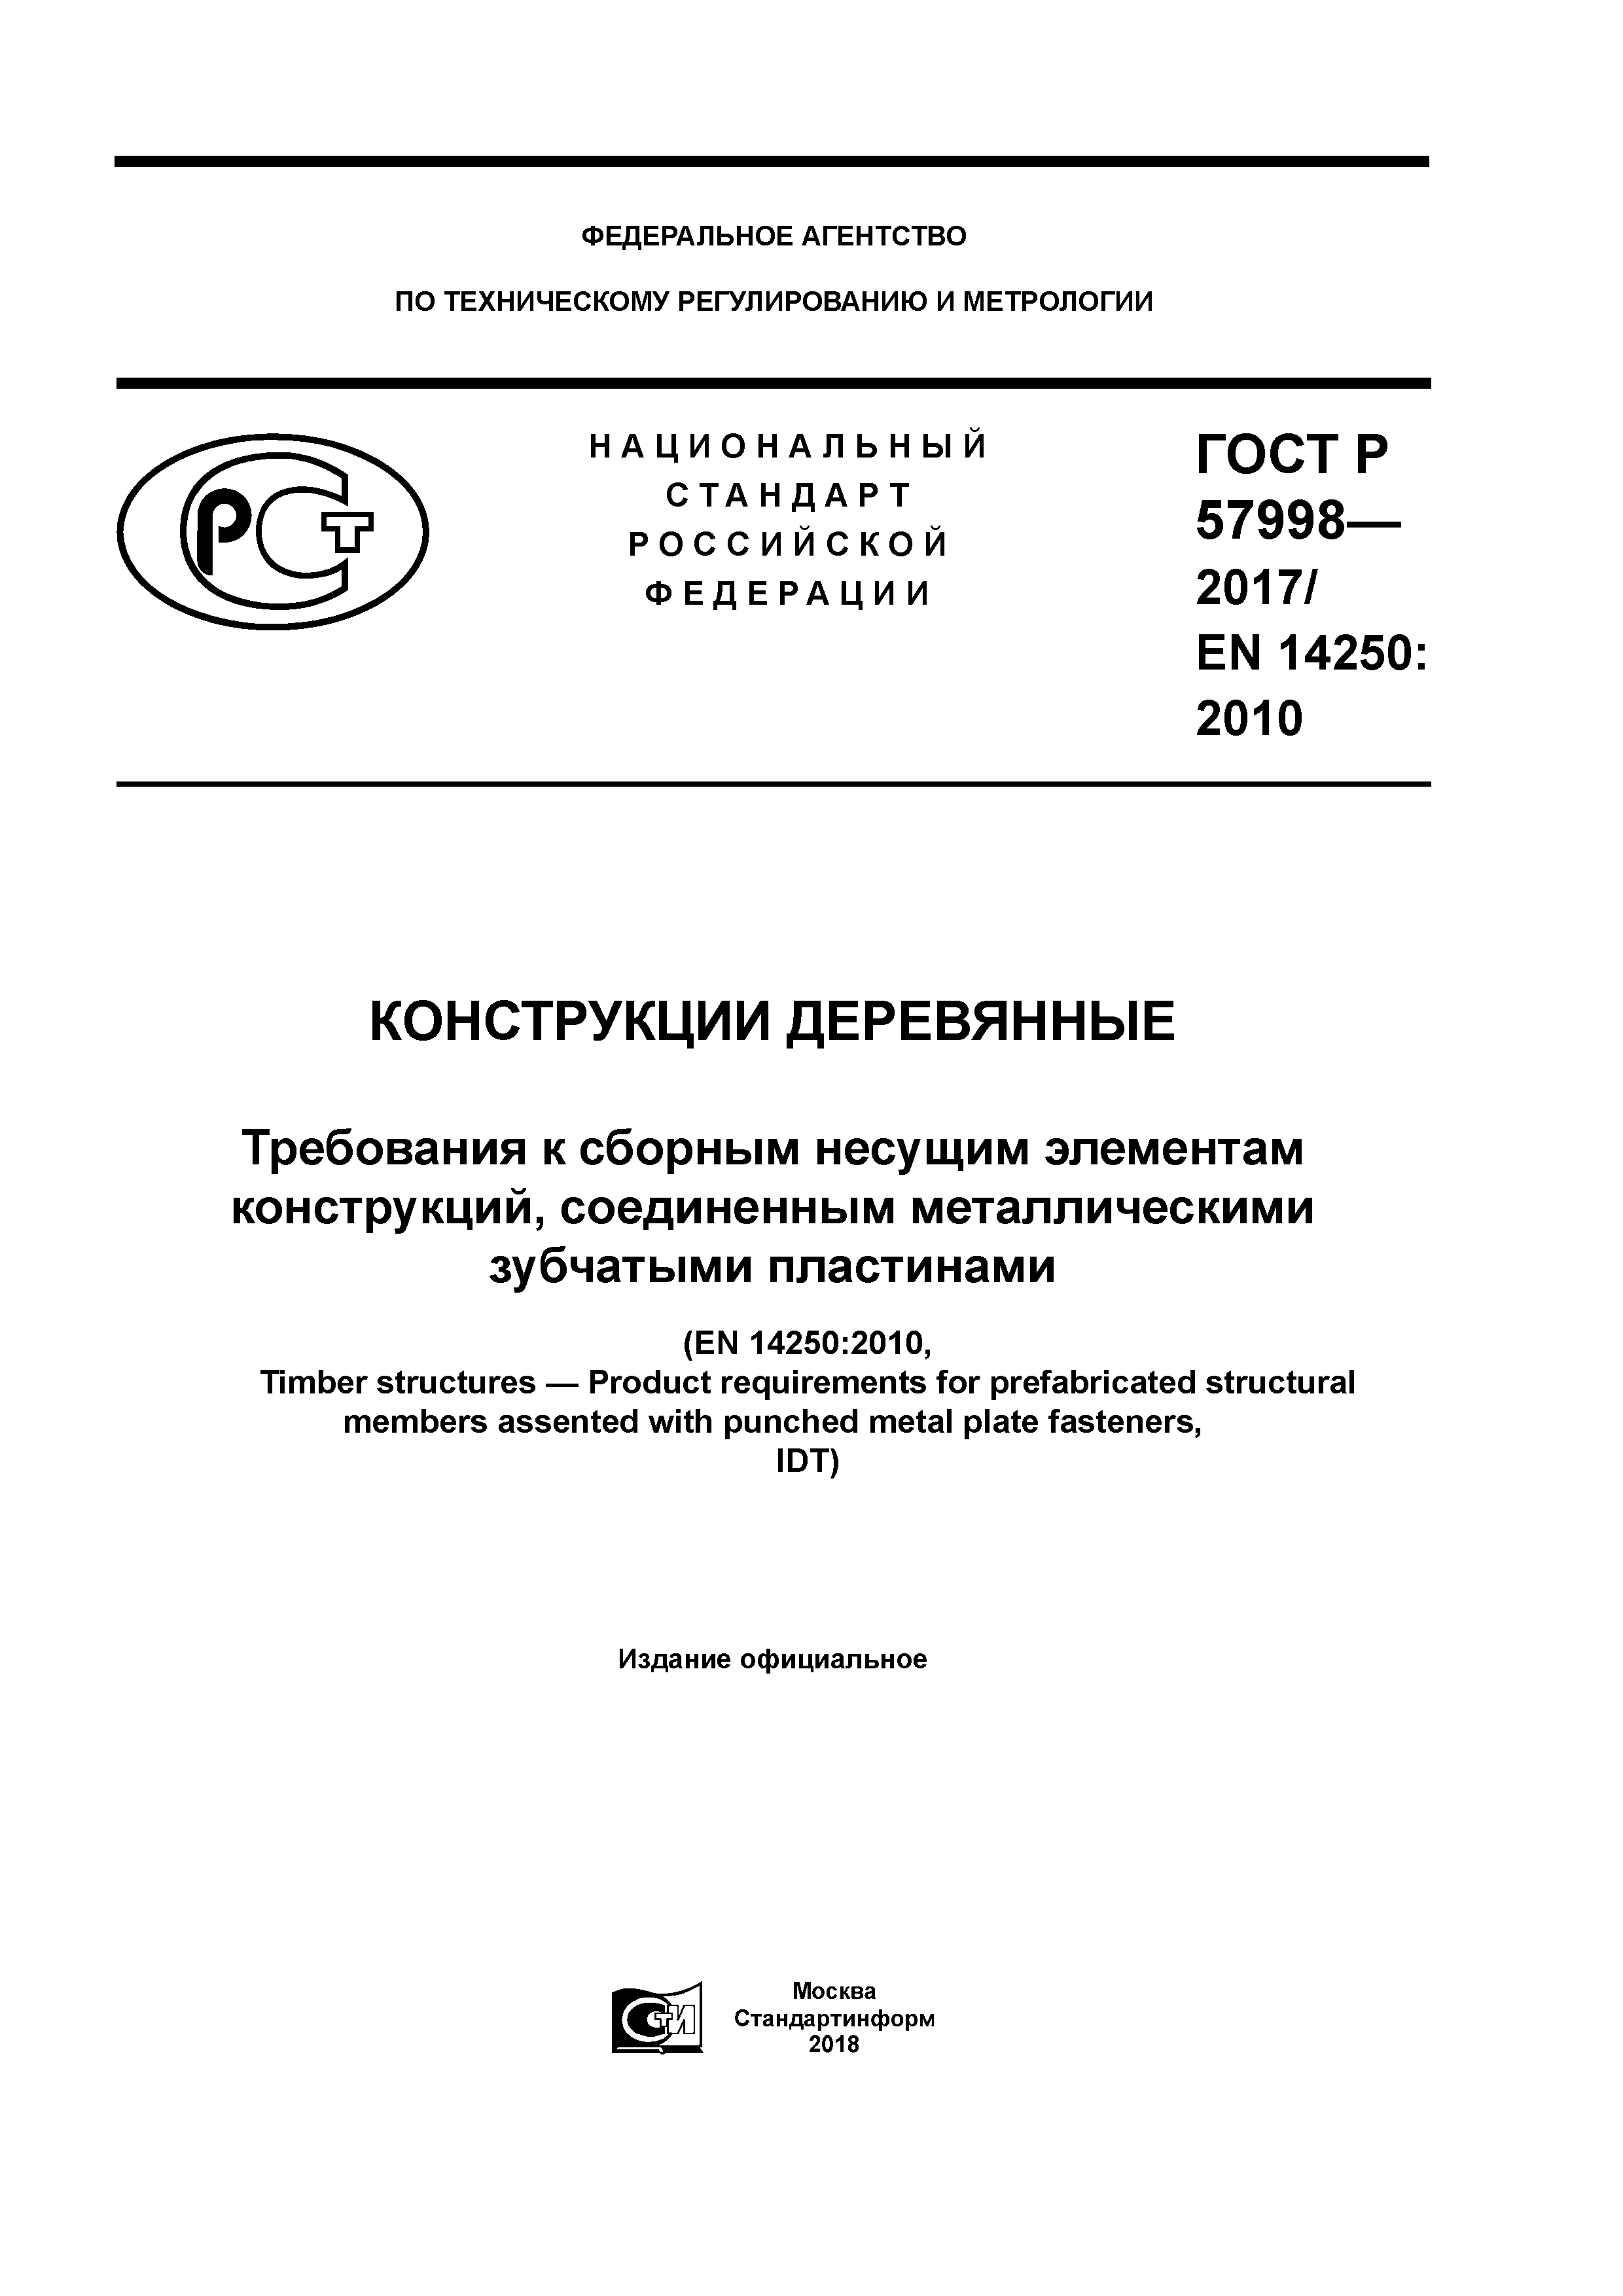 ГОСТ Р 57998-2017